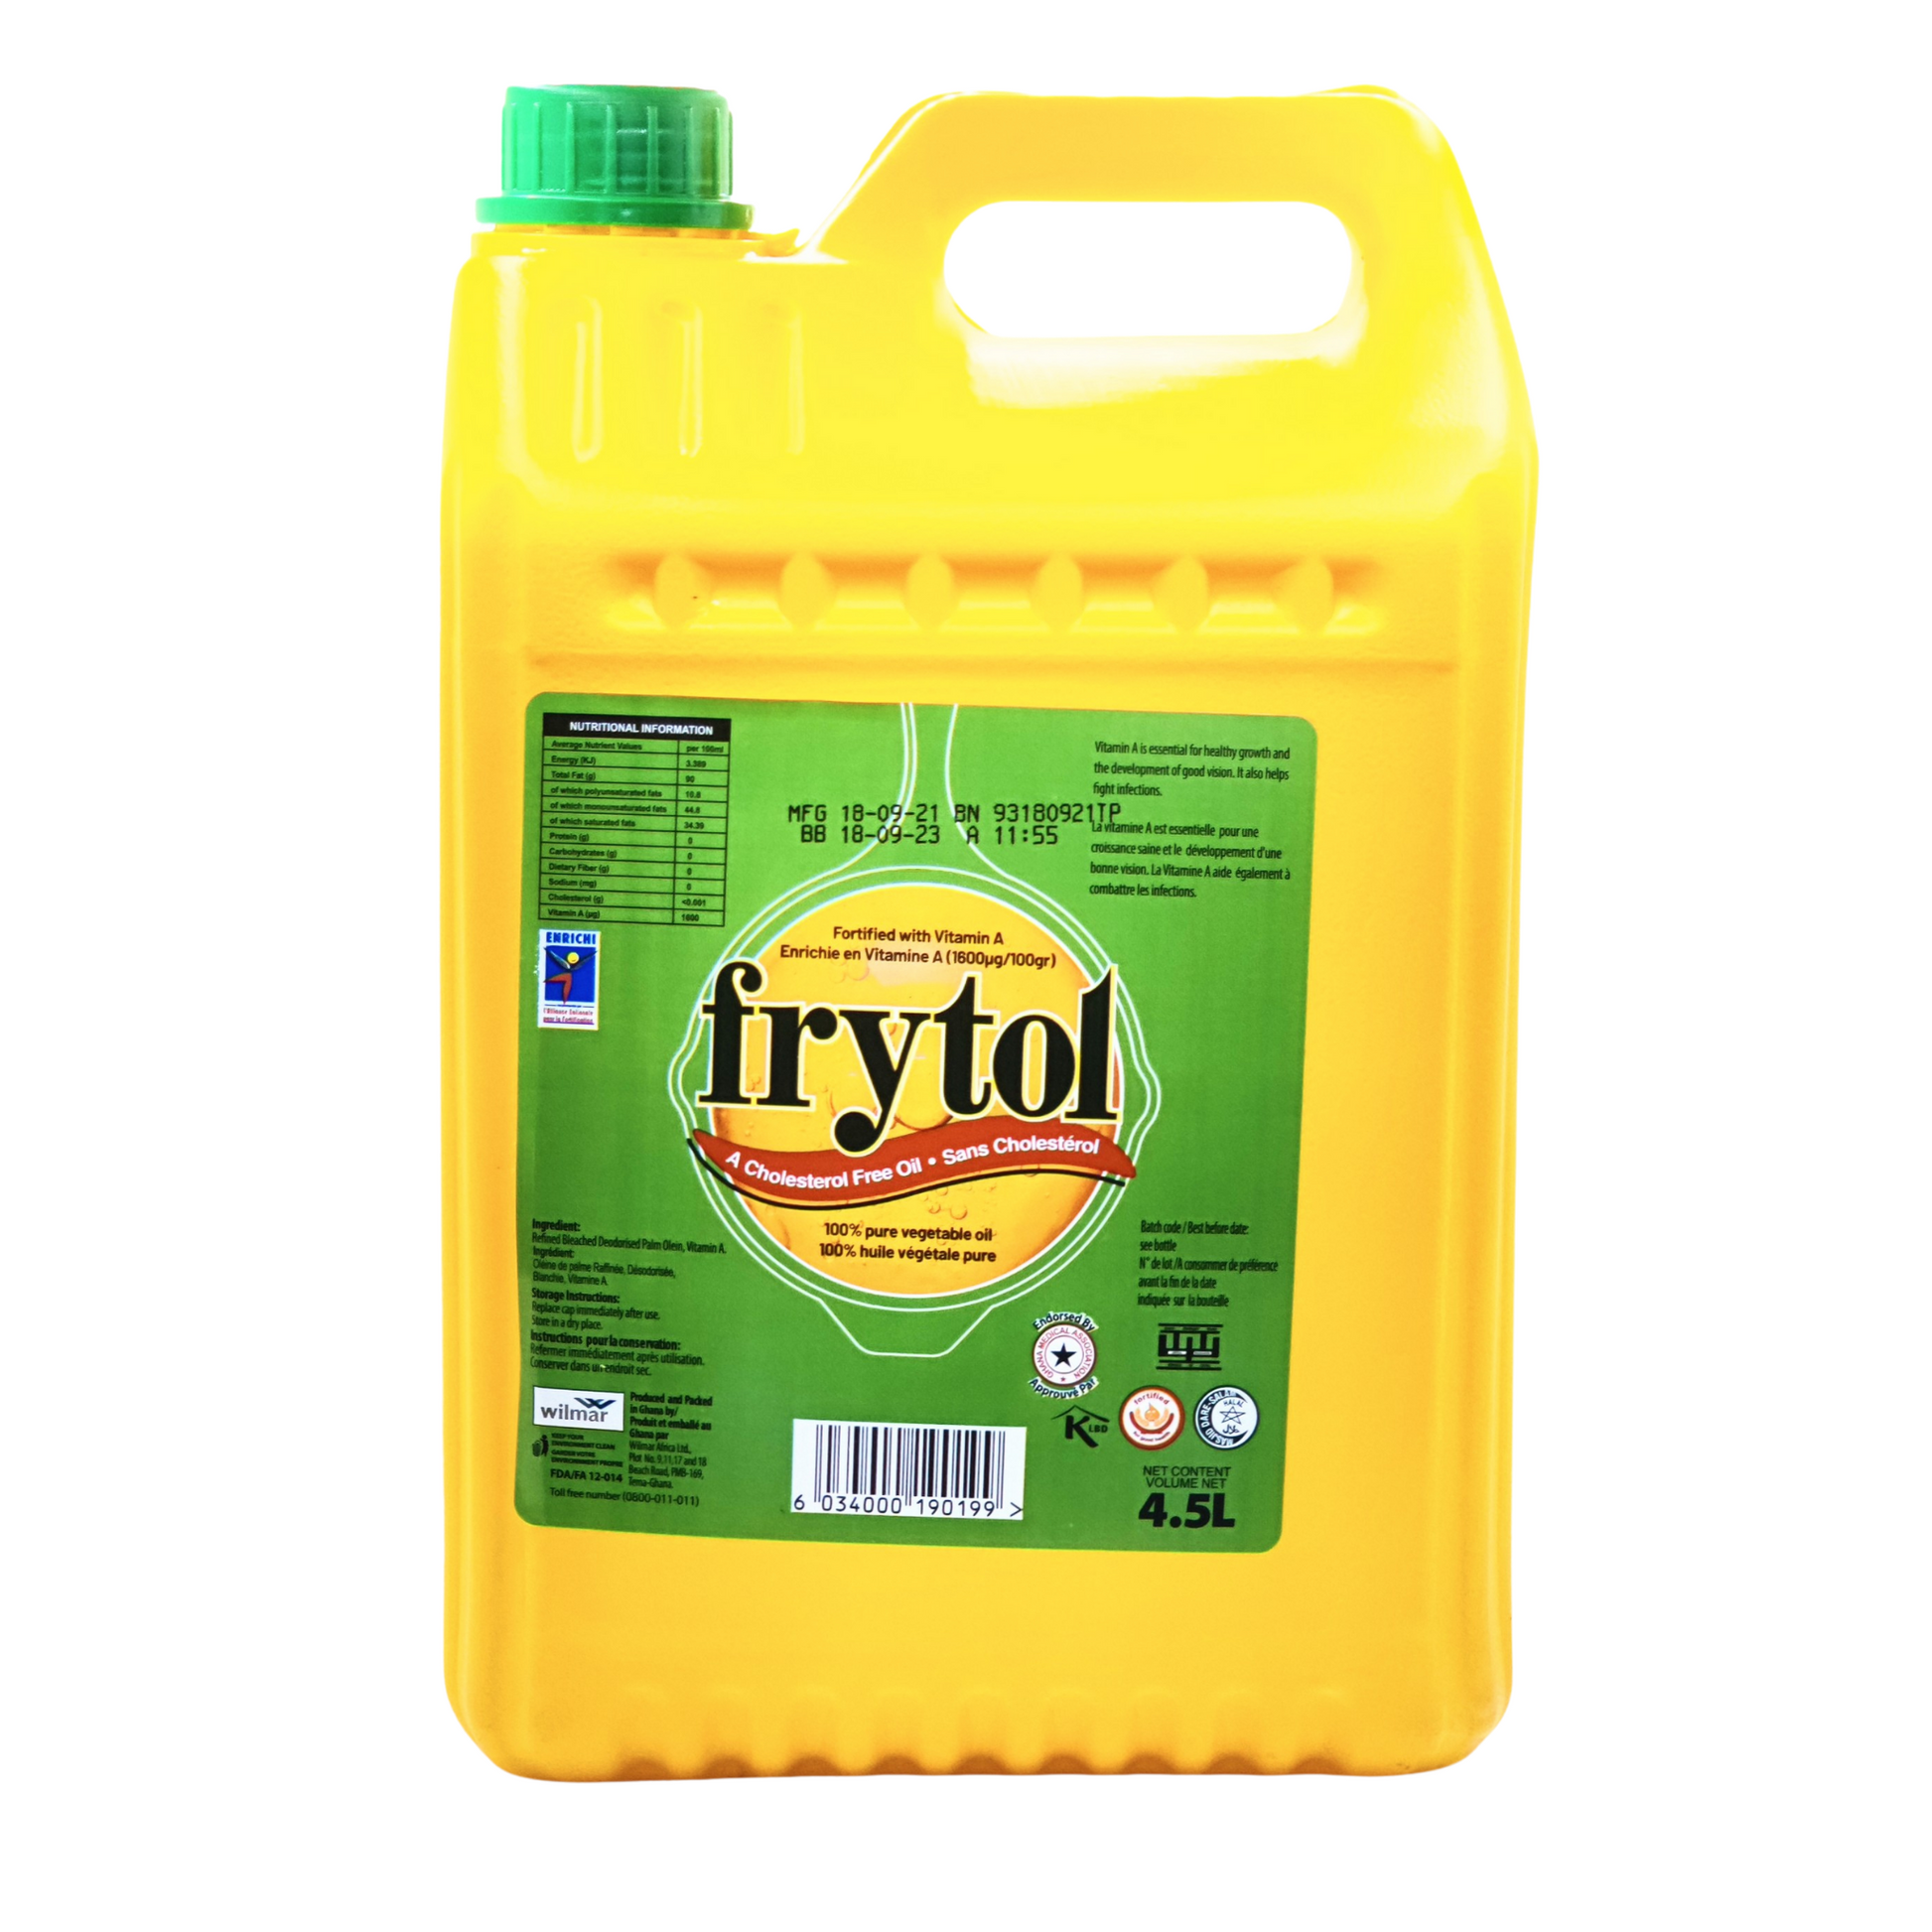 4.5 litre gallon of frytol vegetable cooking oil